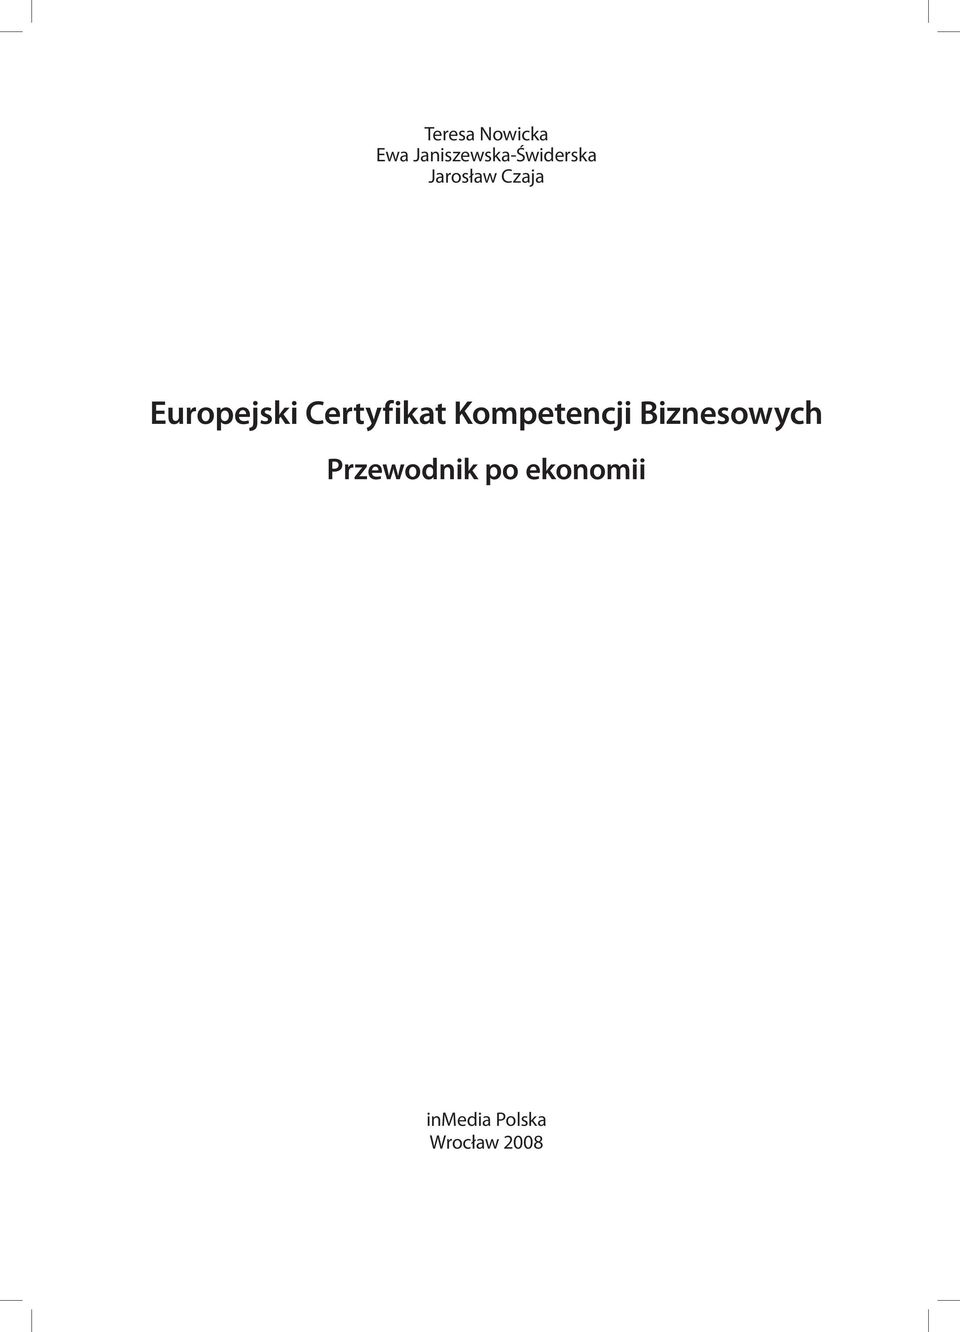 Europejski Certyfikat Kompetencji